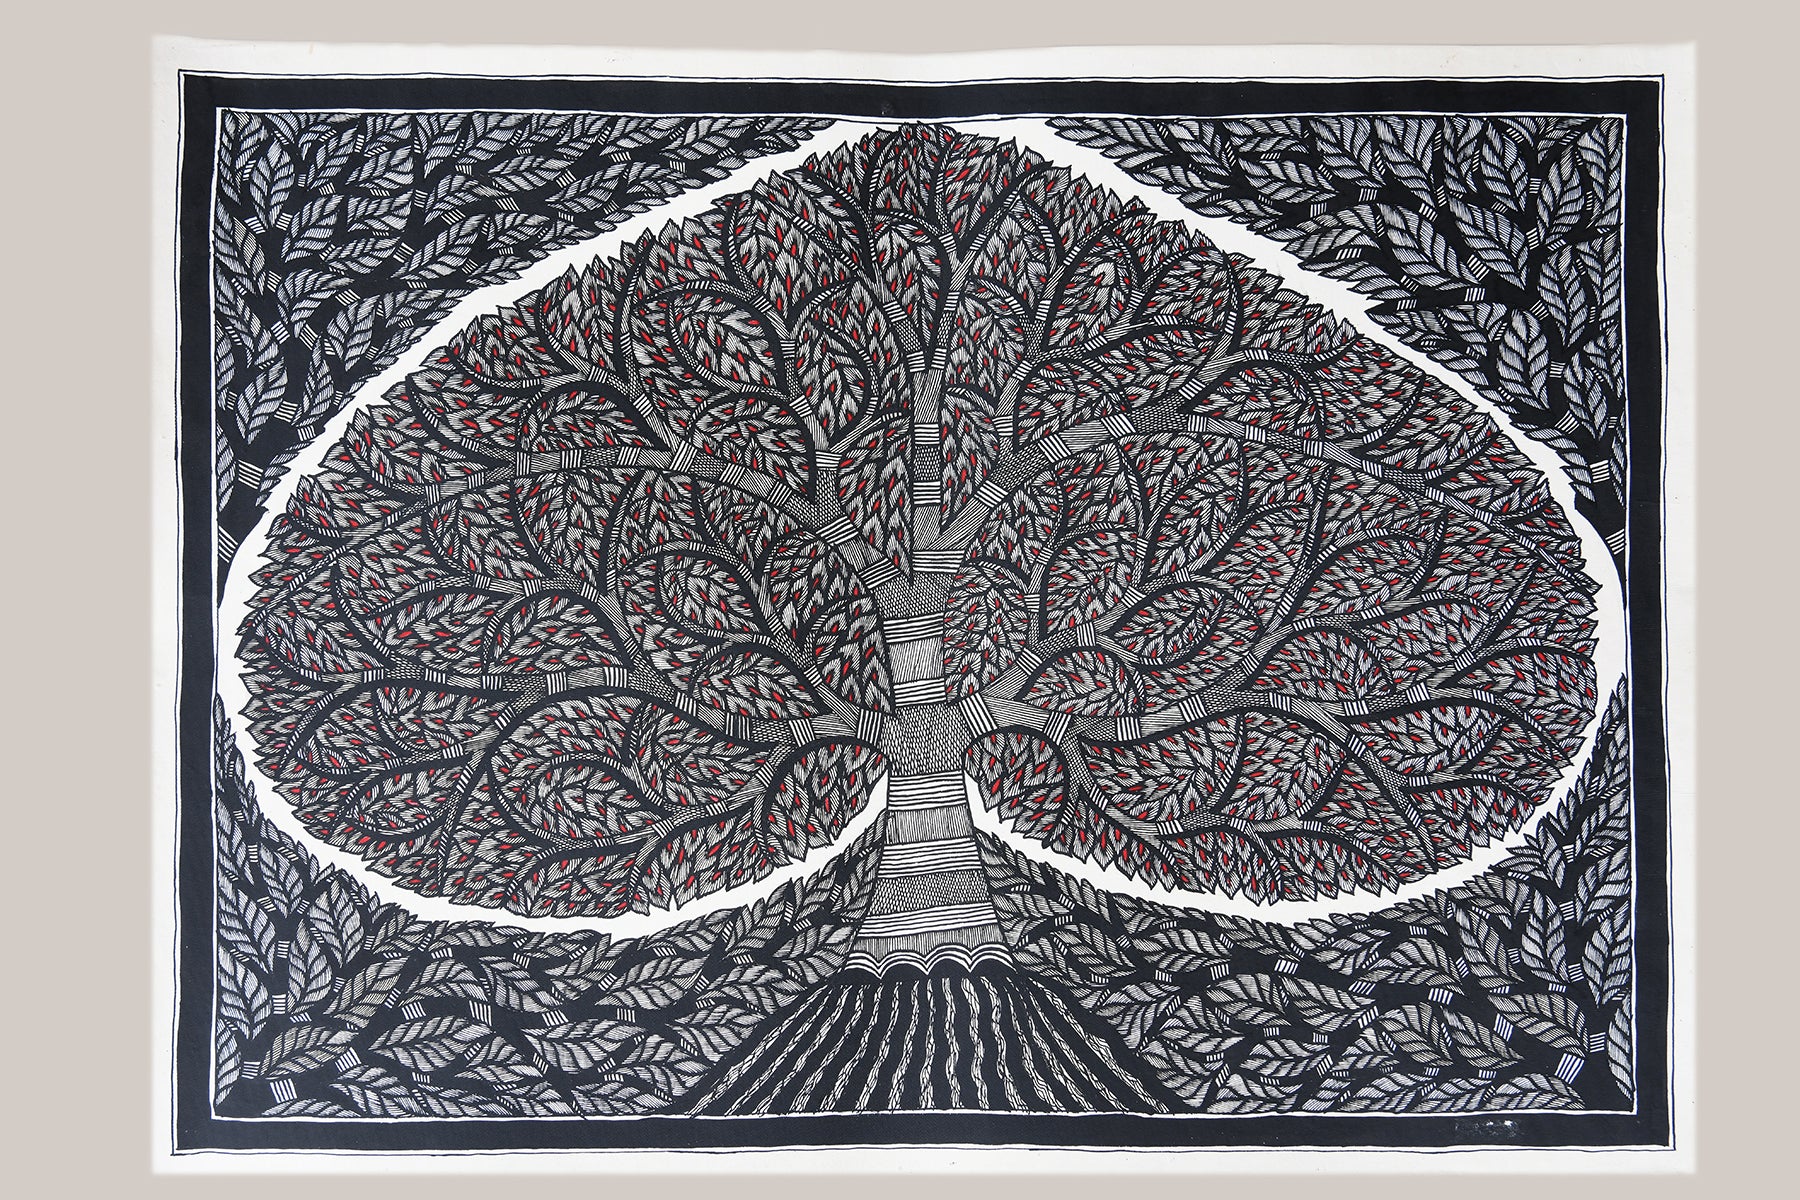 Godna painting "Tree of Life" by Ranjit Paswan